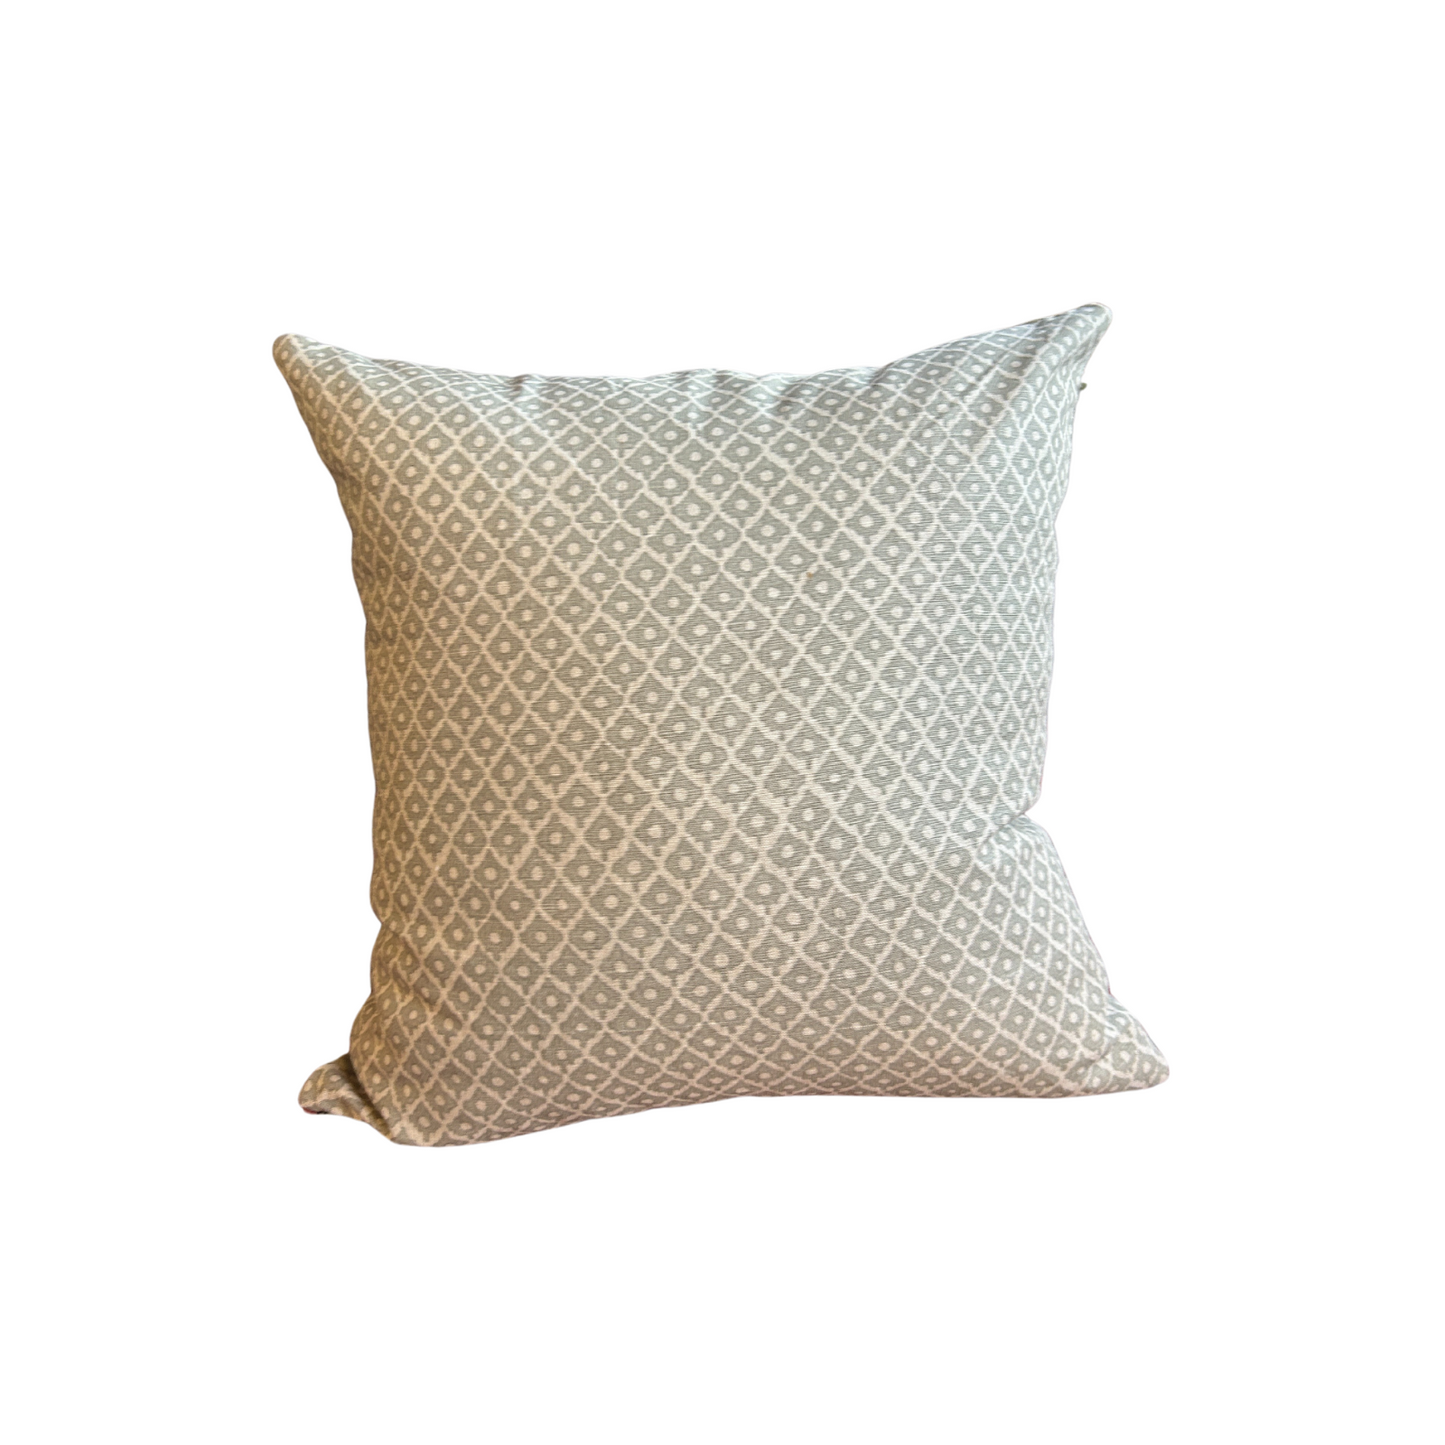 20" x 20" Designer Remnant Pillow